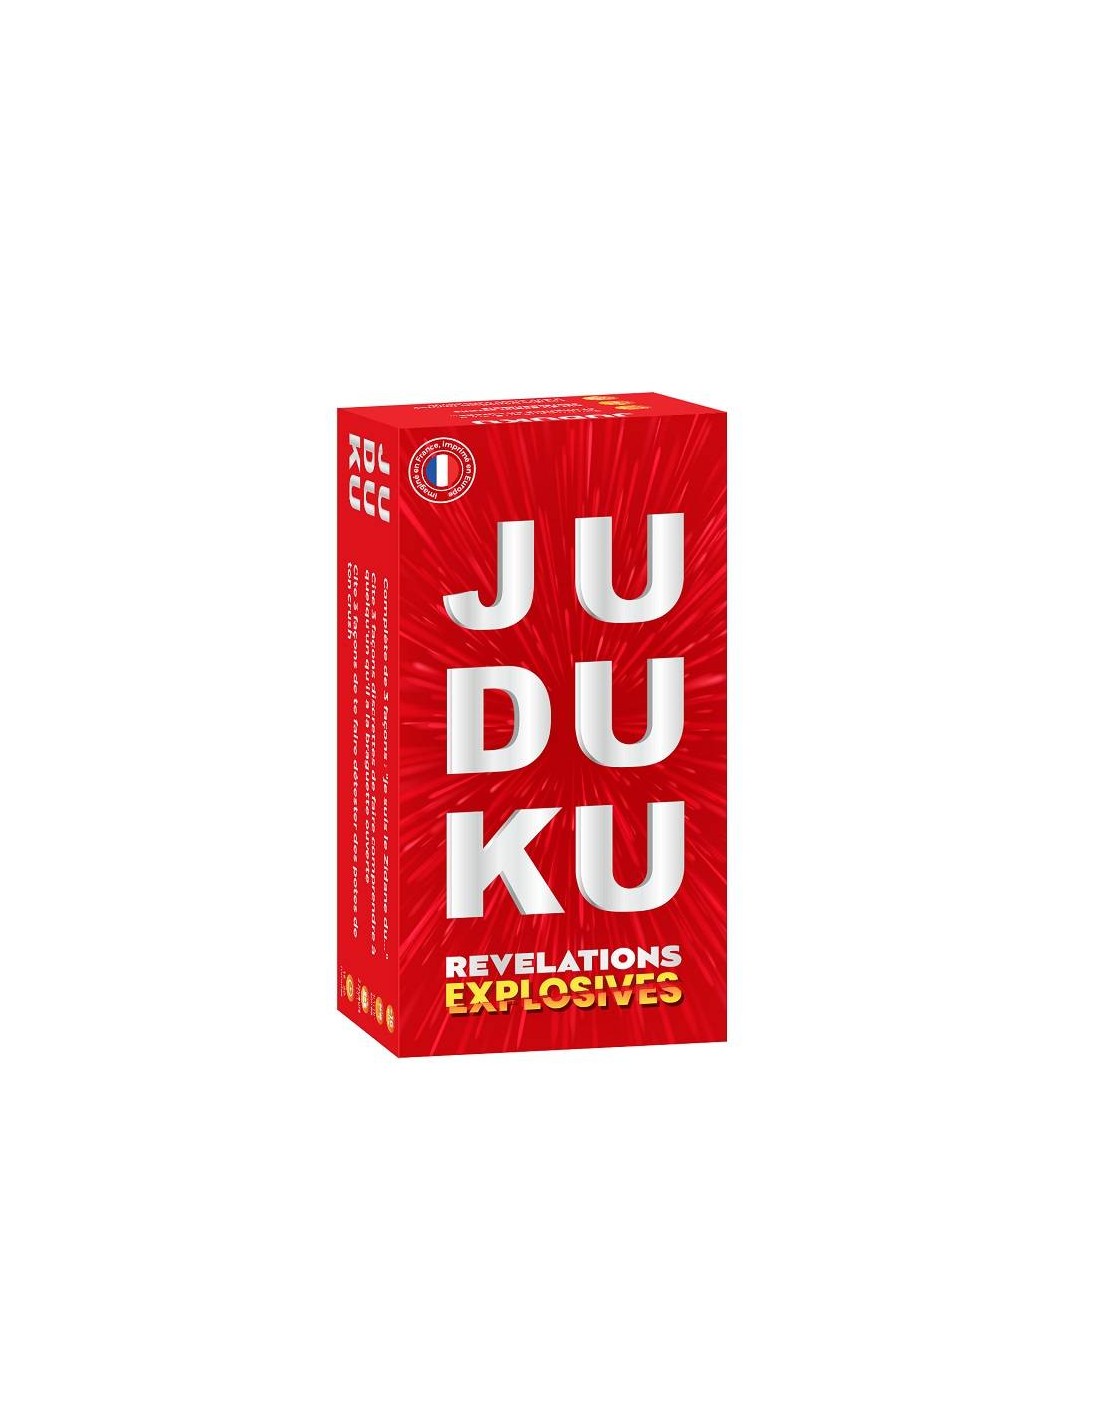 Buy Juduku 4: Révélations Explosives - ATM Gaming - Board games